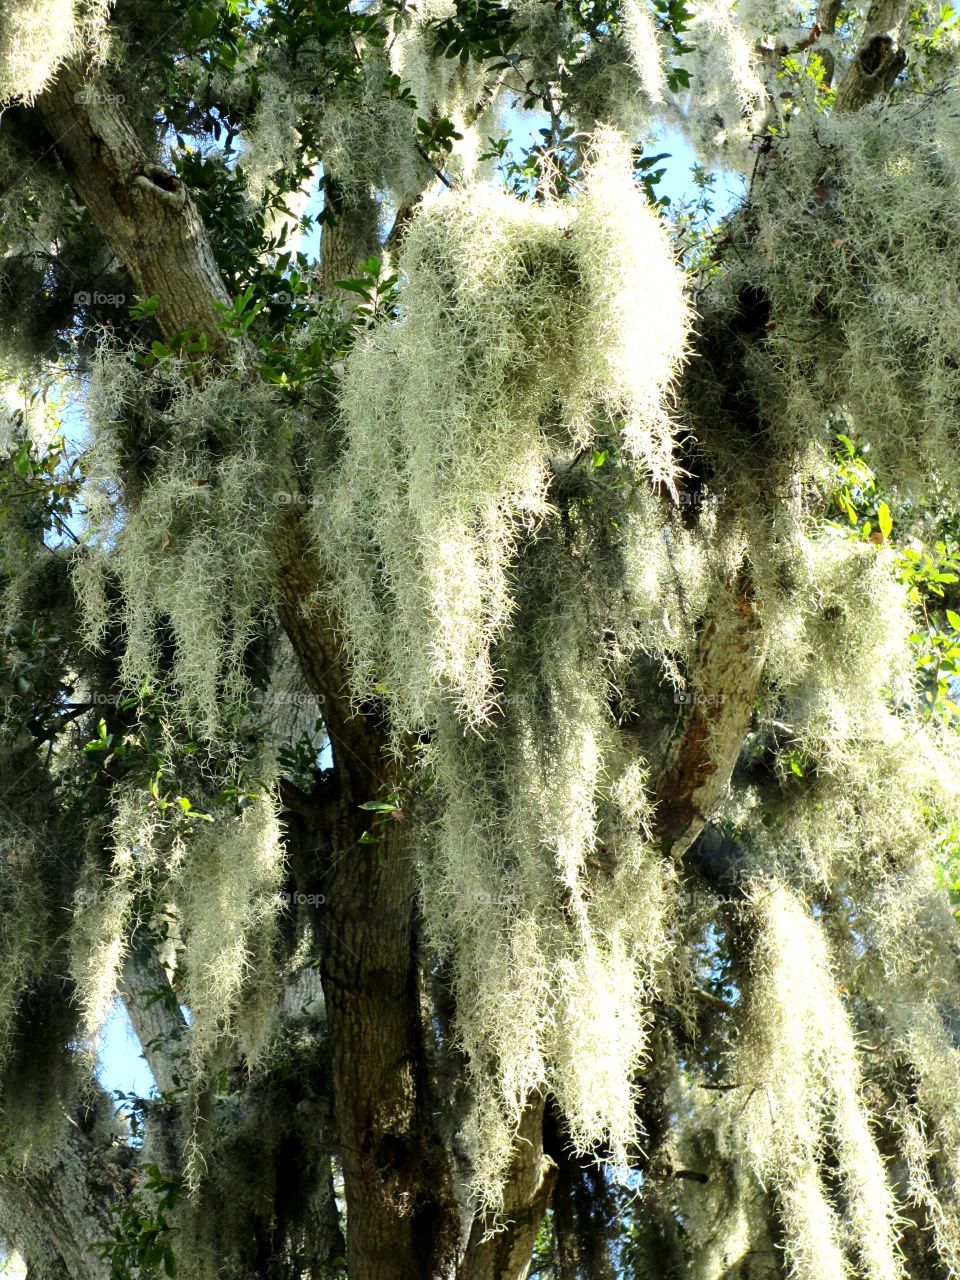 Southern charm of legendary Spanish Moss, Old Man's Beard, Maiden's Hair on Live Oak tree